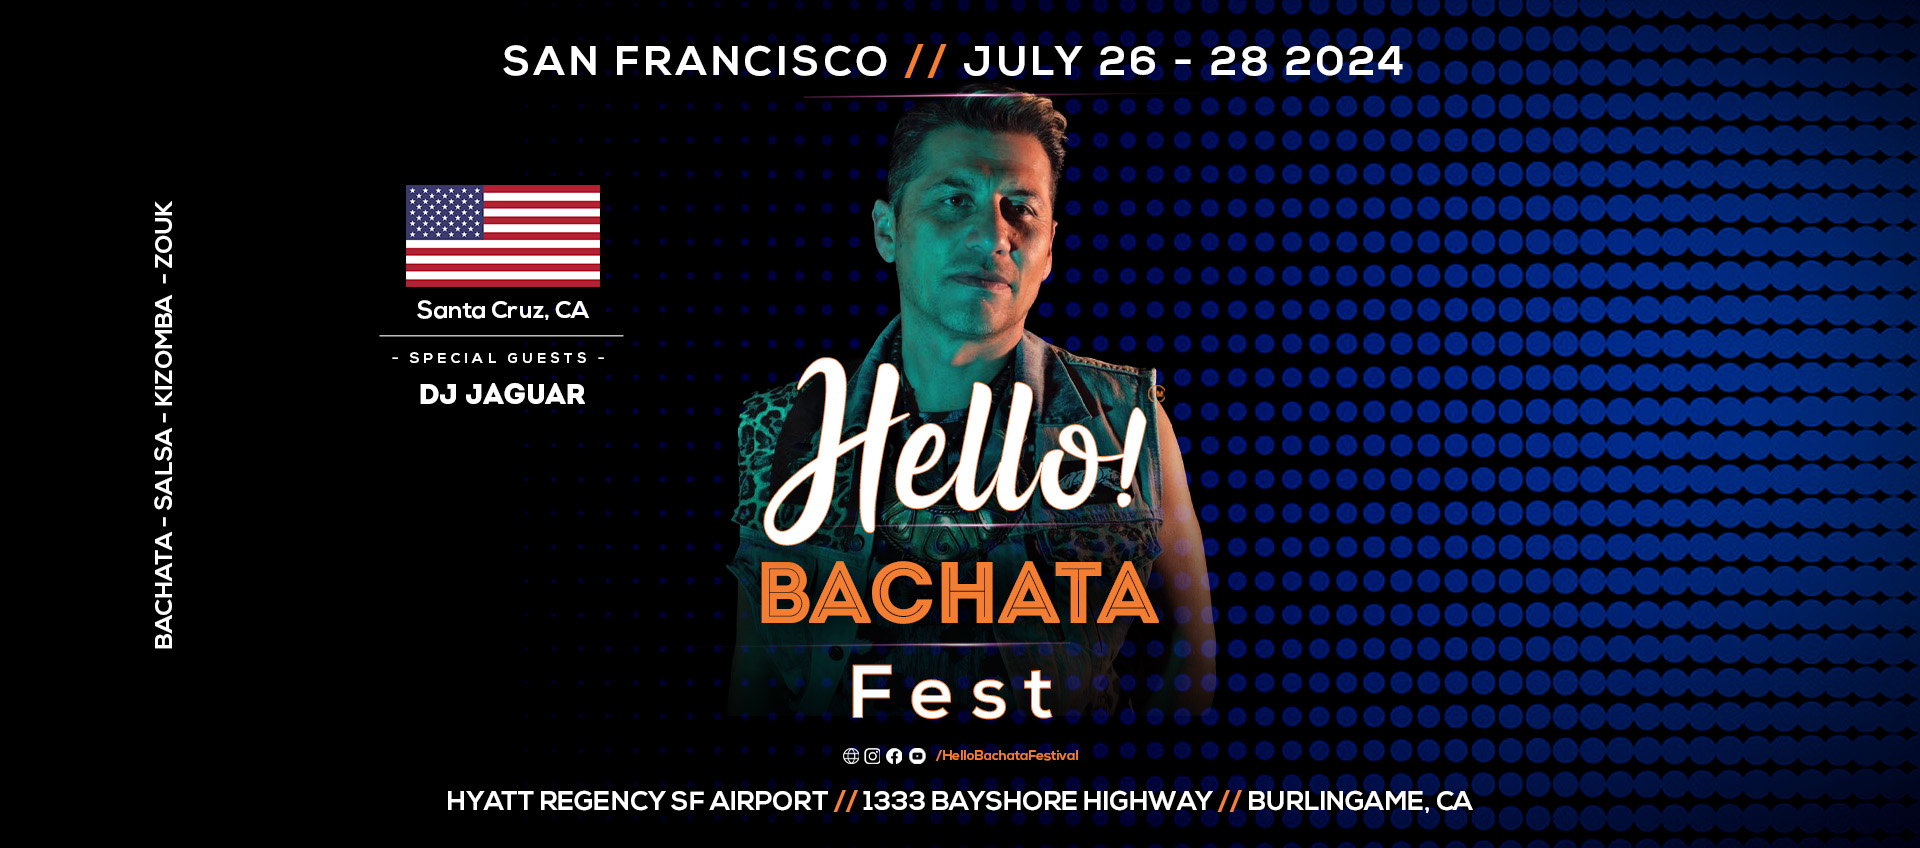 Hello Bachata Fest - DJ Jaguar - Santa Cruz